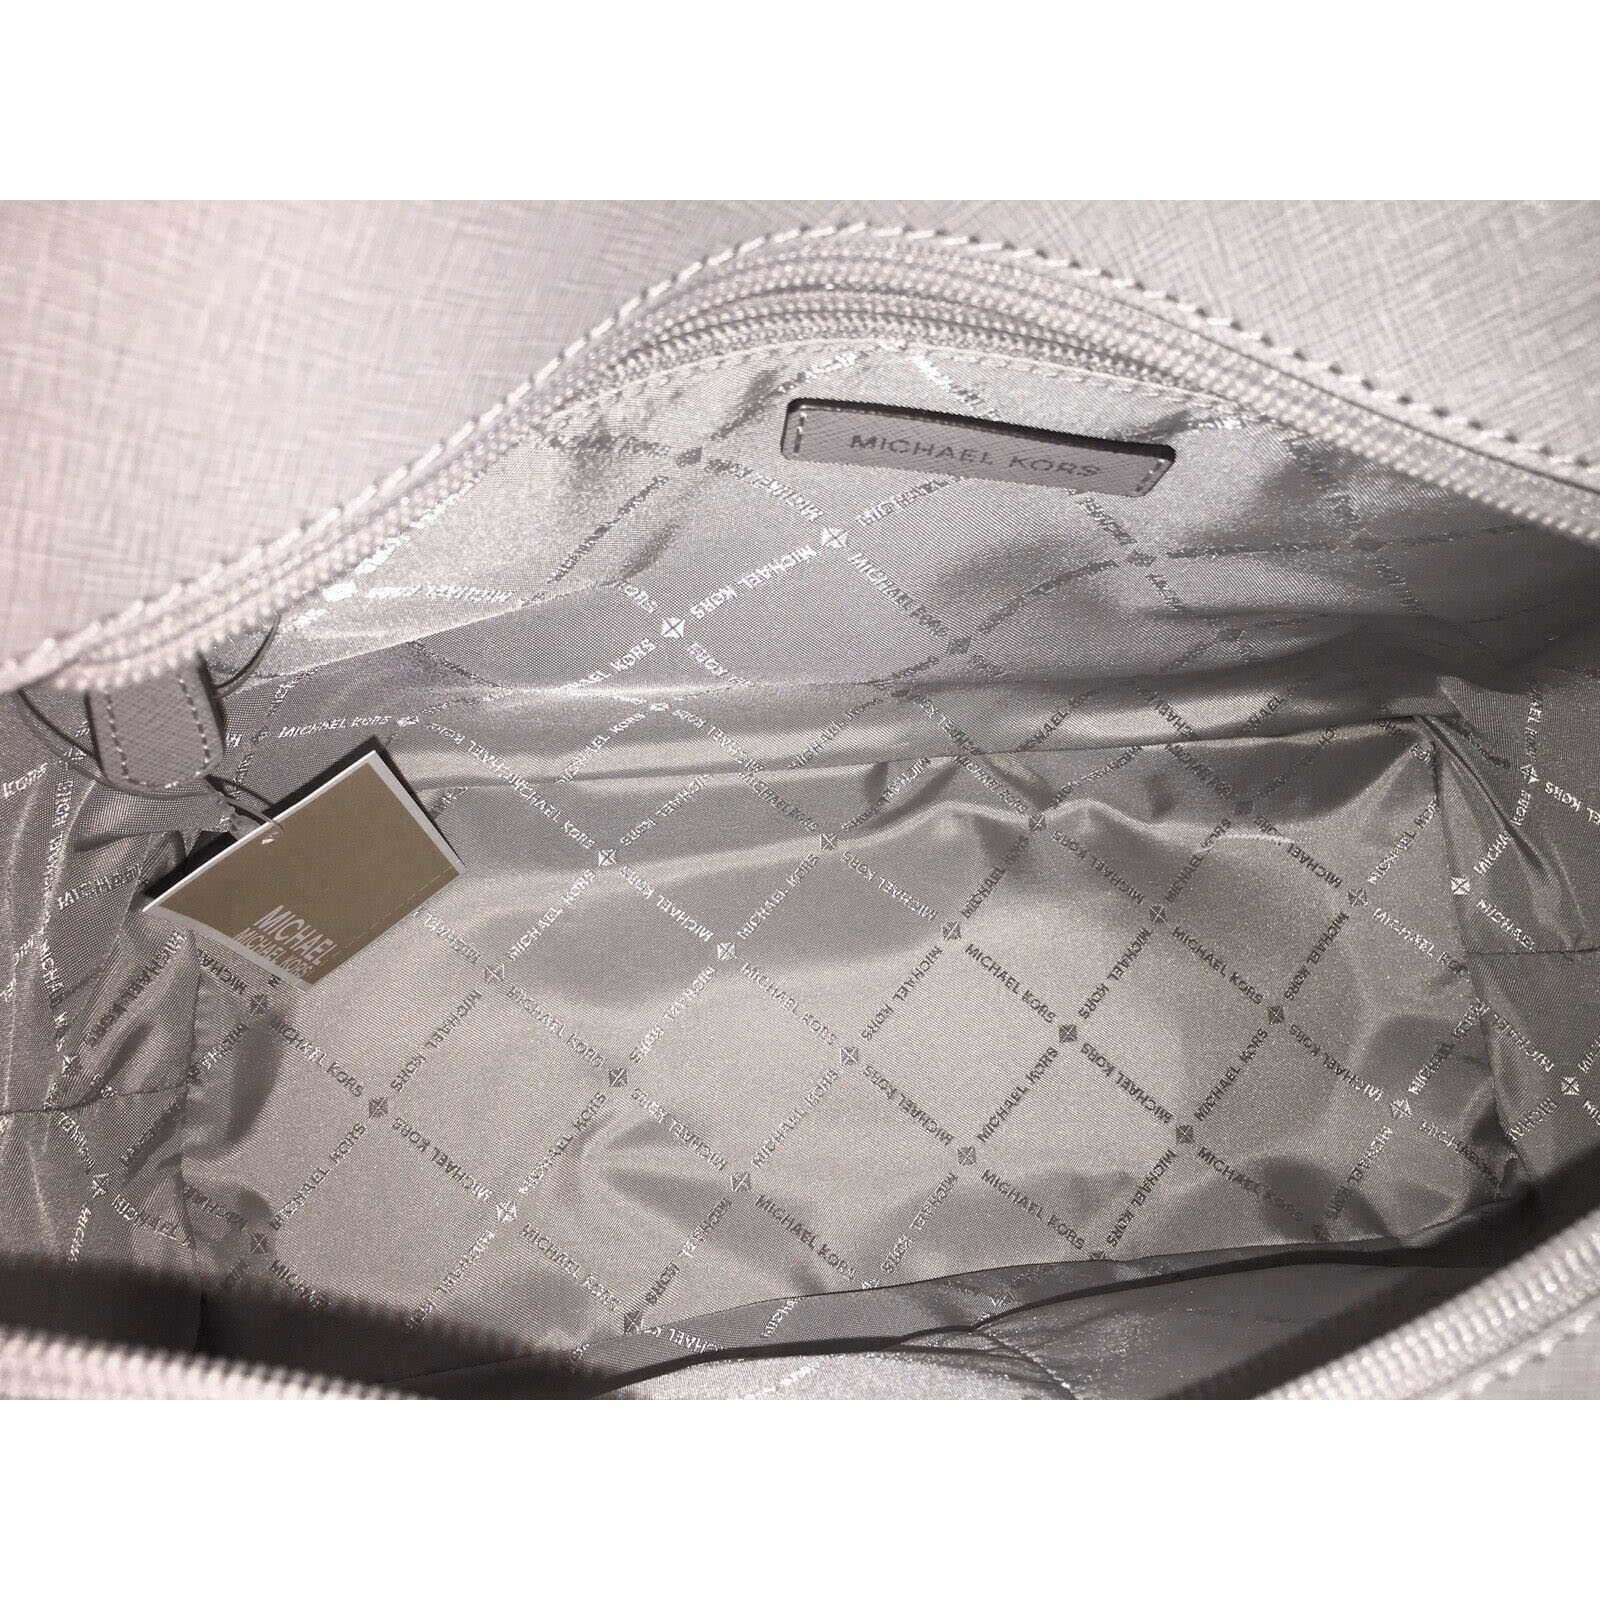 Michael Kors Tote With Gift Bag Jet Set Travel Small Zip Top Tote Shoulder Bag Pearl Grey # 35S0GTVT1L